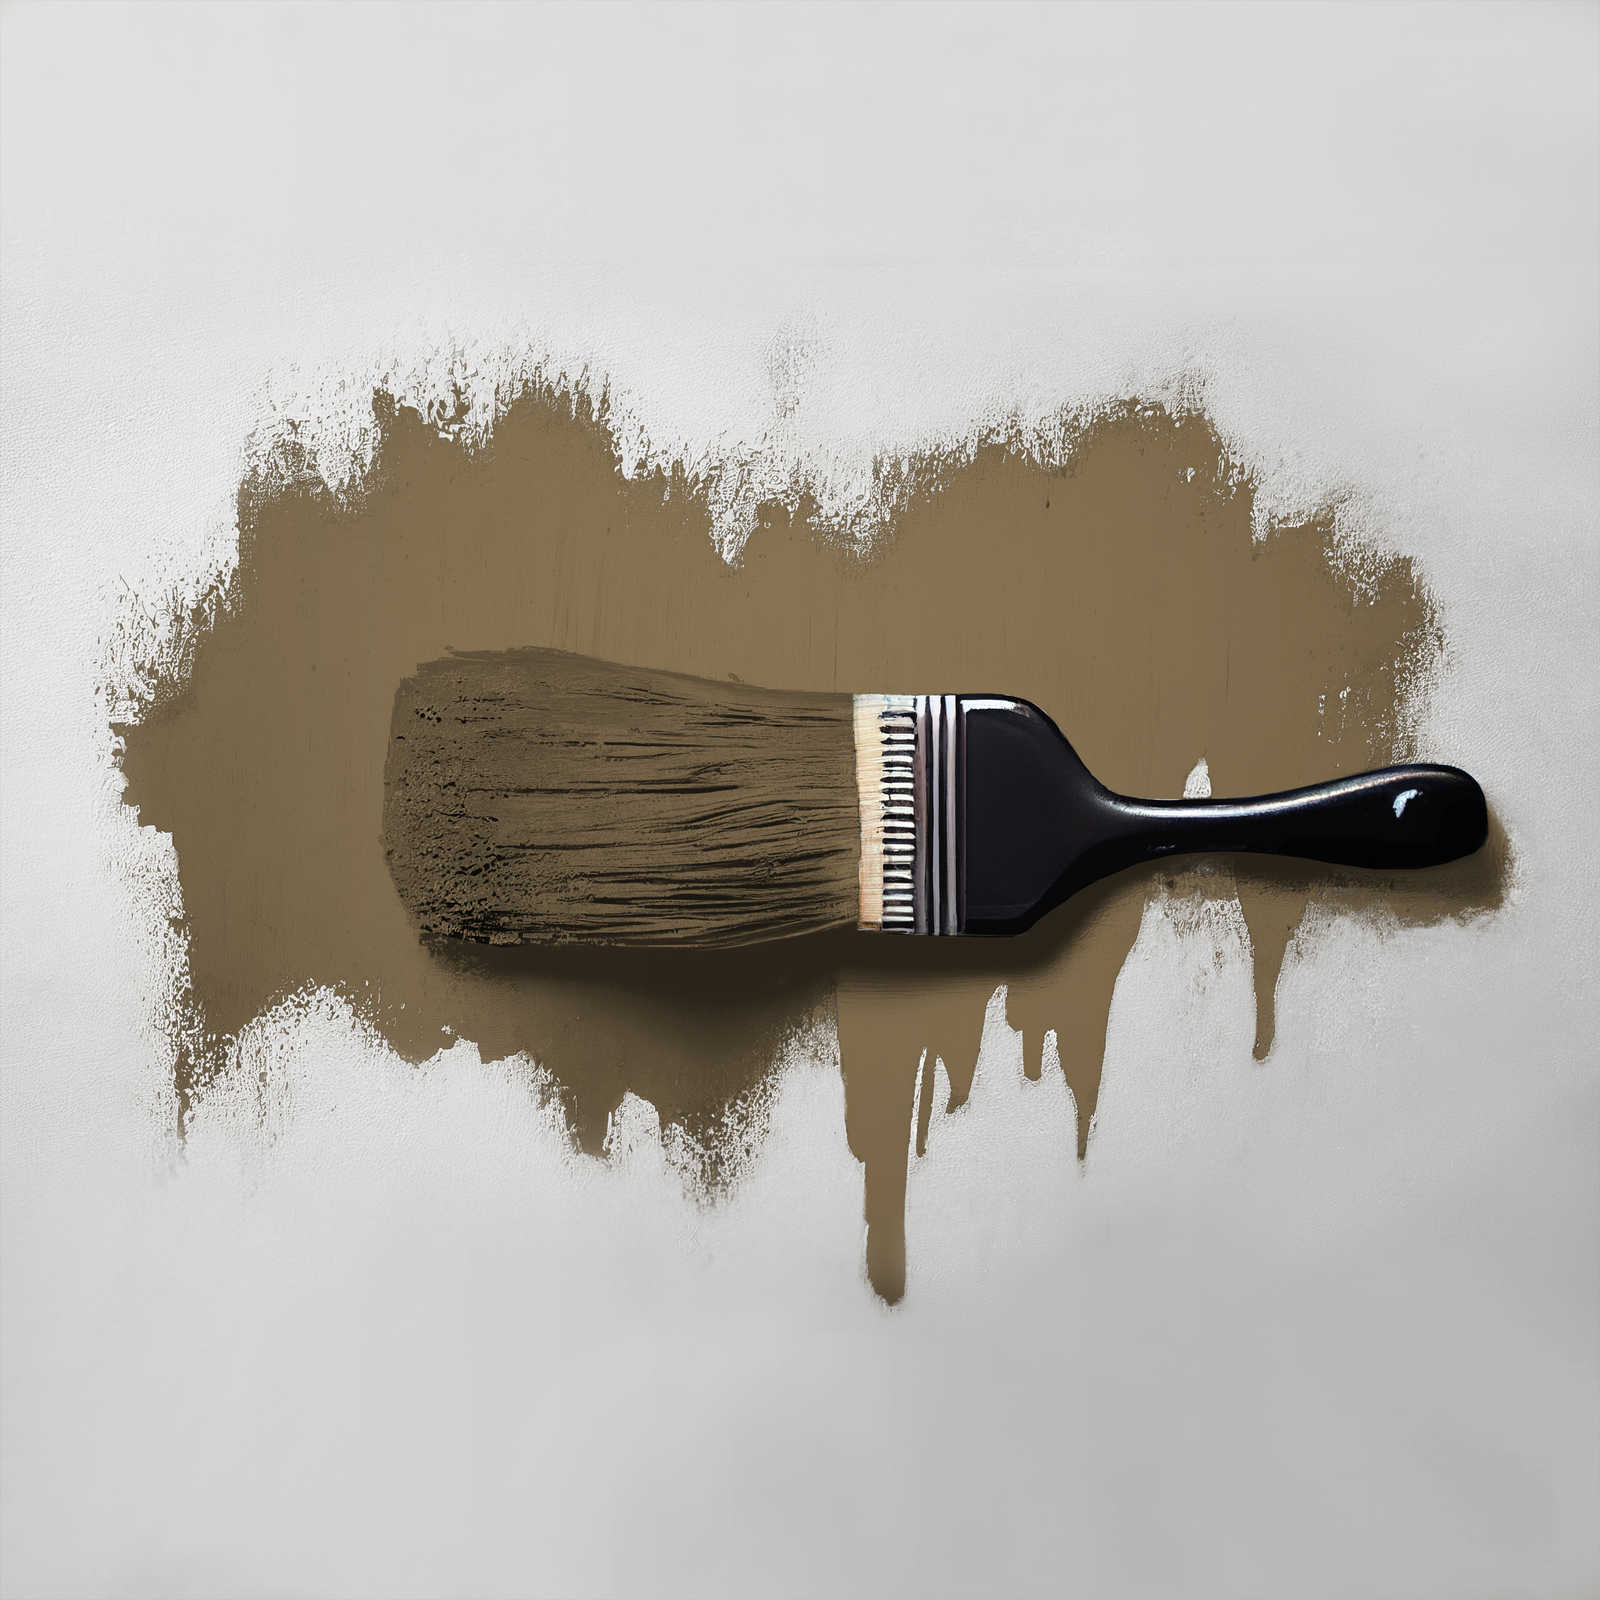             Wall Paint TCK6014 »Tasty Truffle« in deep brown – 2.5 litre
        